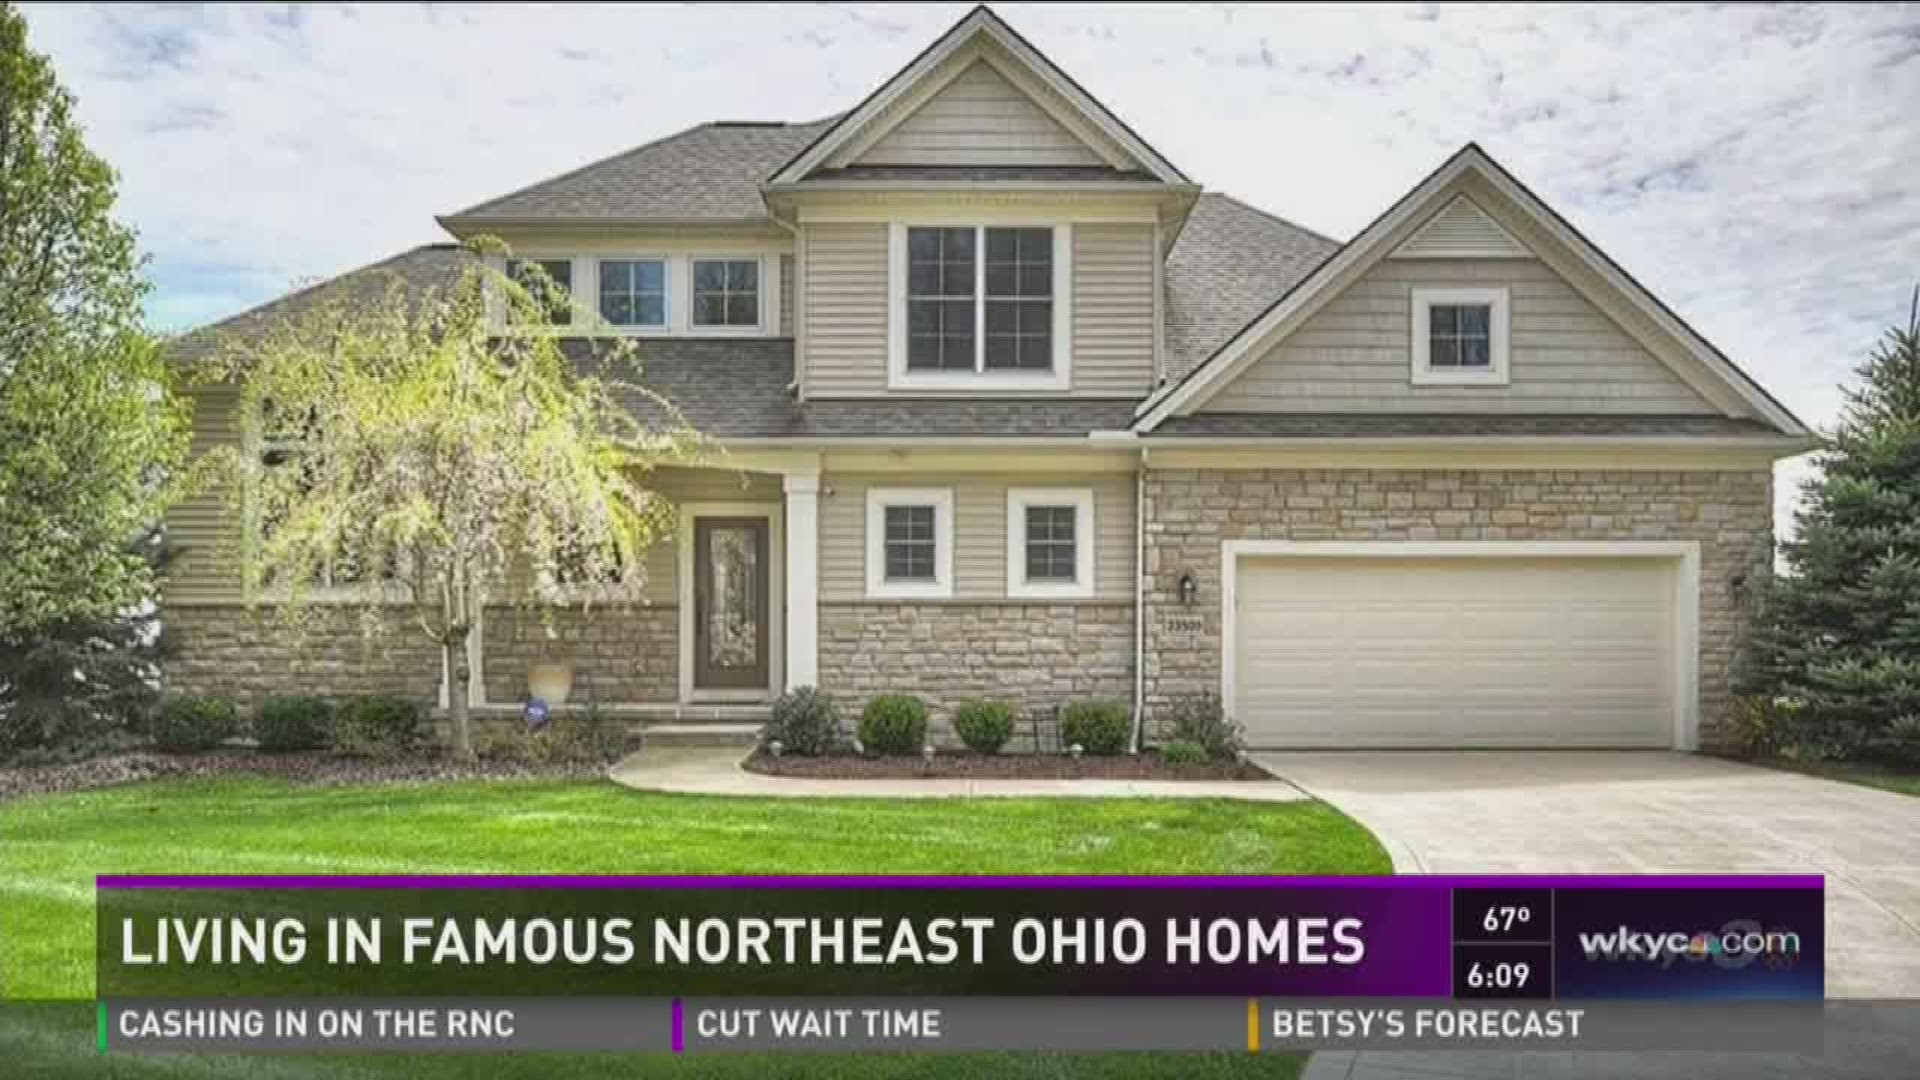 Living famous: Northeast Ohio homes